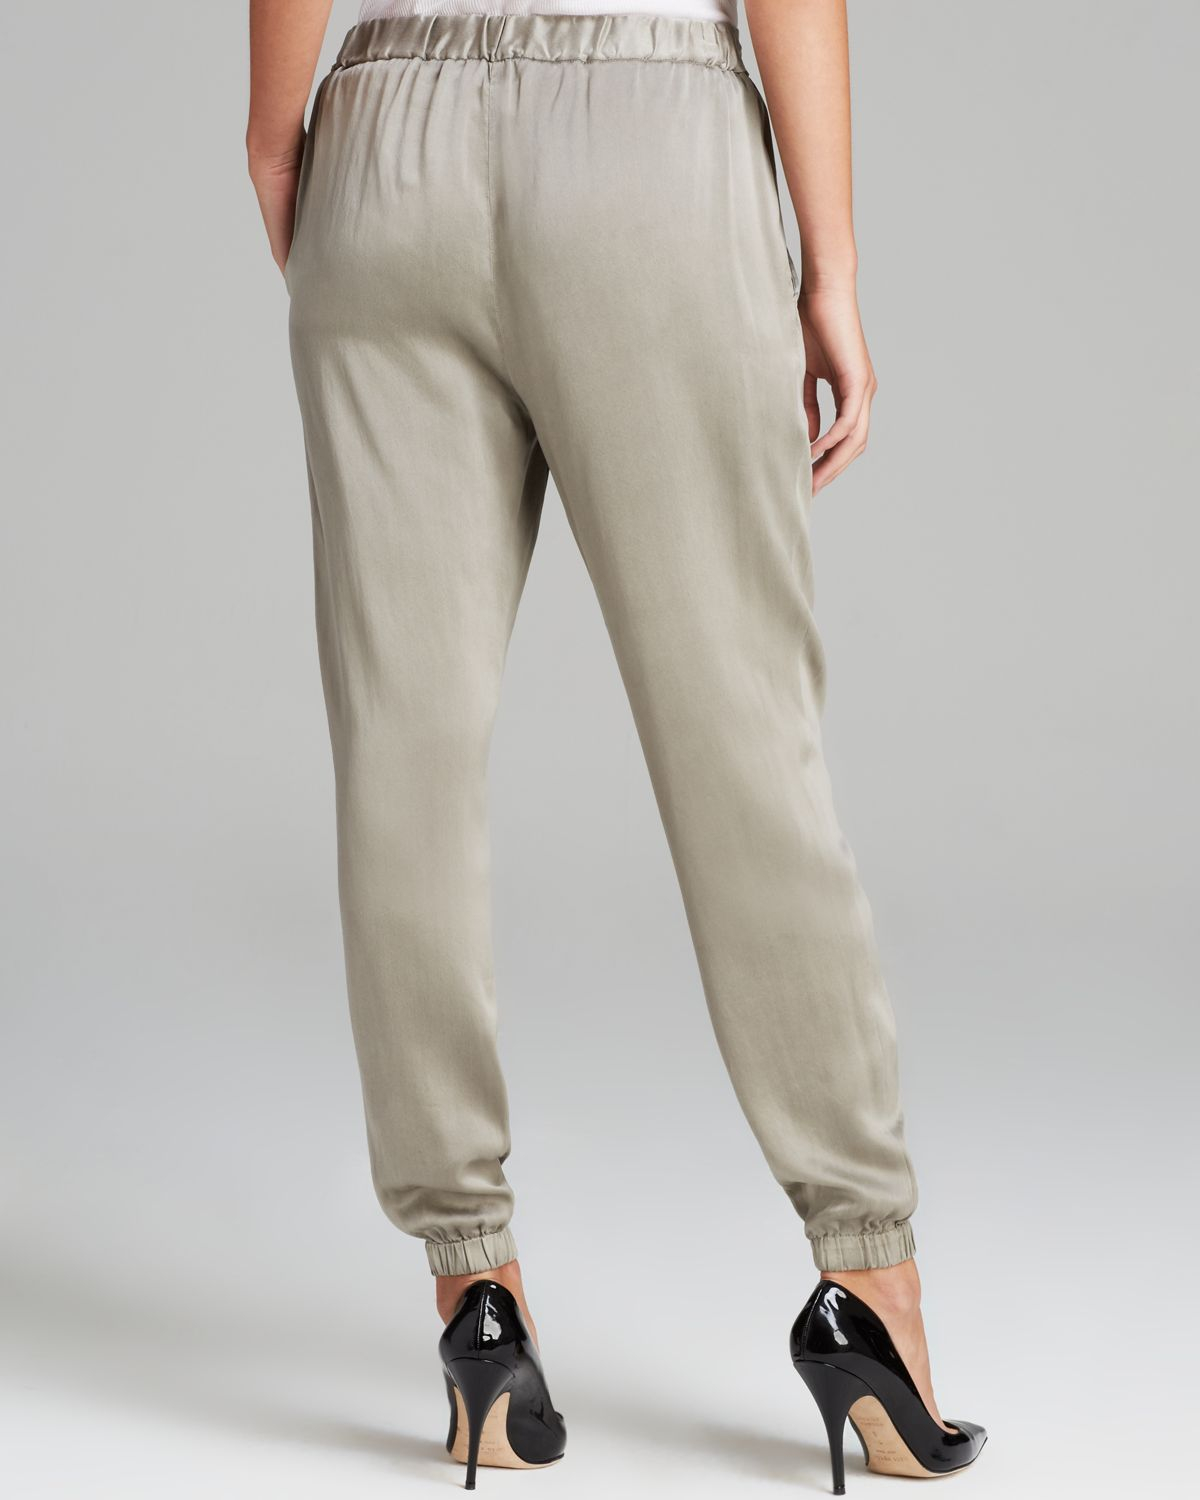 Lyst - Eileen Fisher Drawstring Silk Pants in Gray